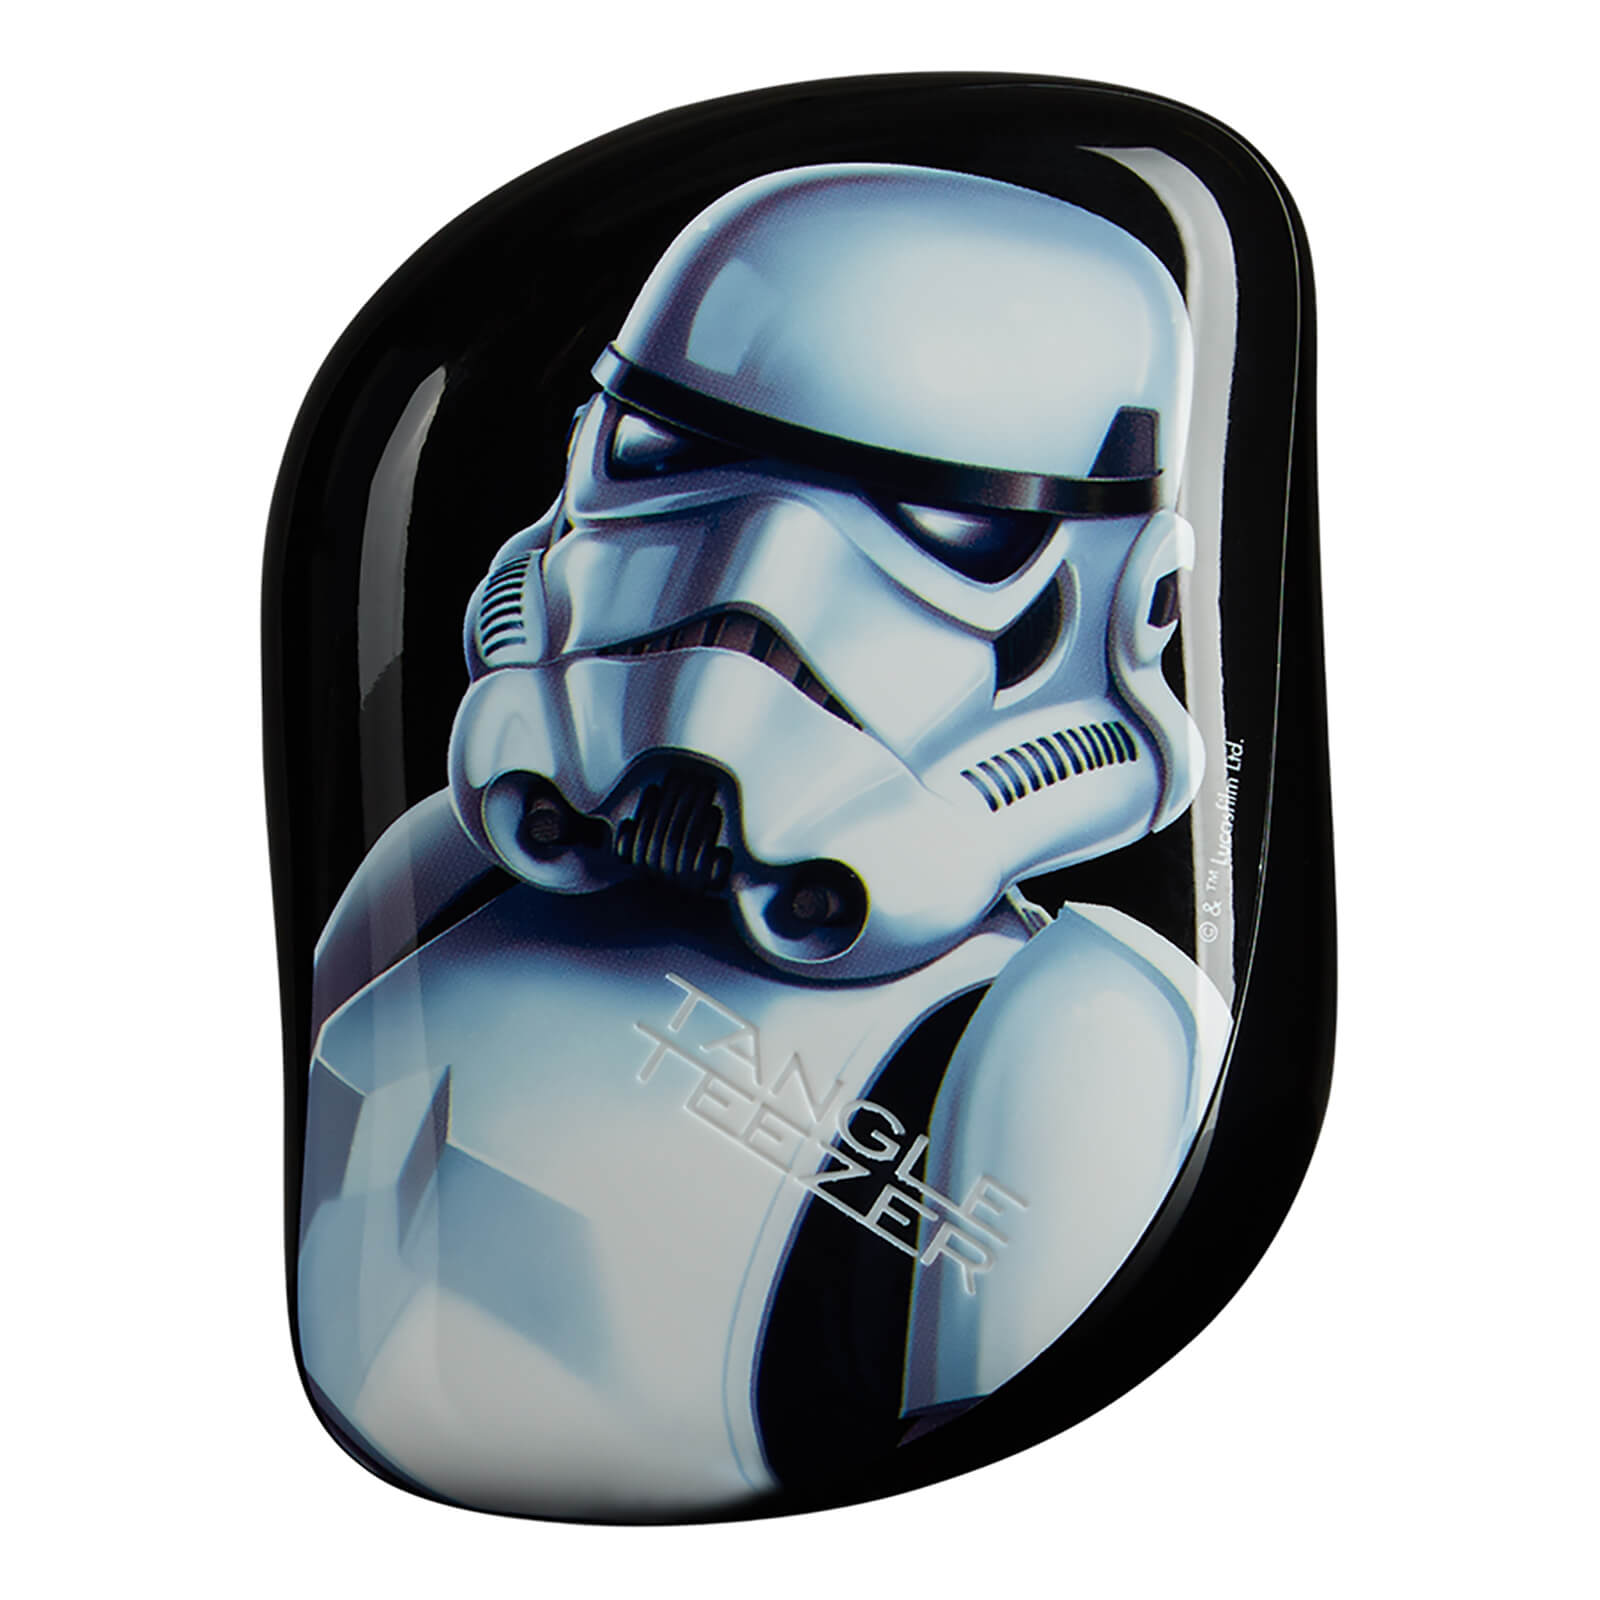 Cepillo para el pelo Compact Styler de Tangle Teezer - Disney Star Wars Stormtrooper